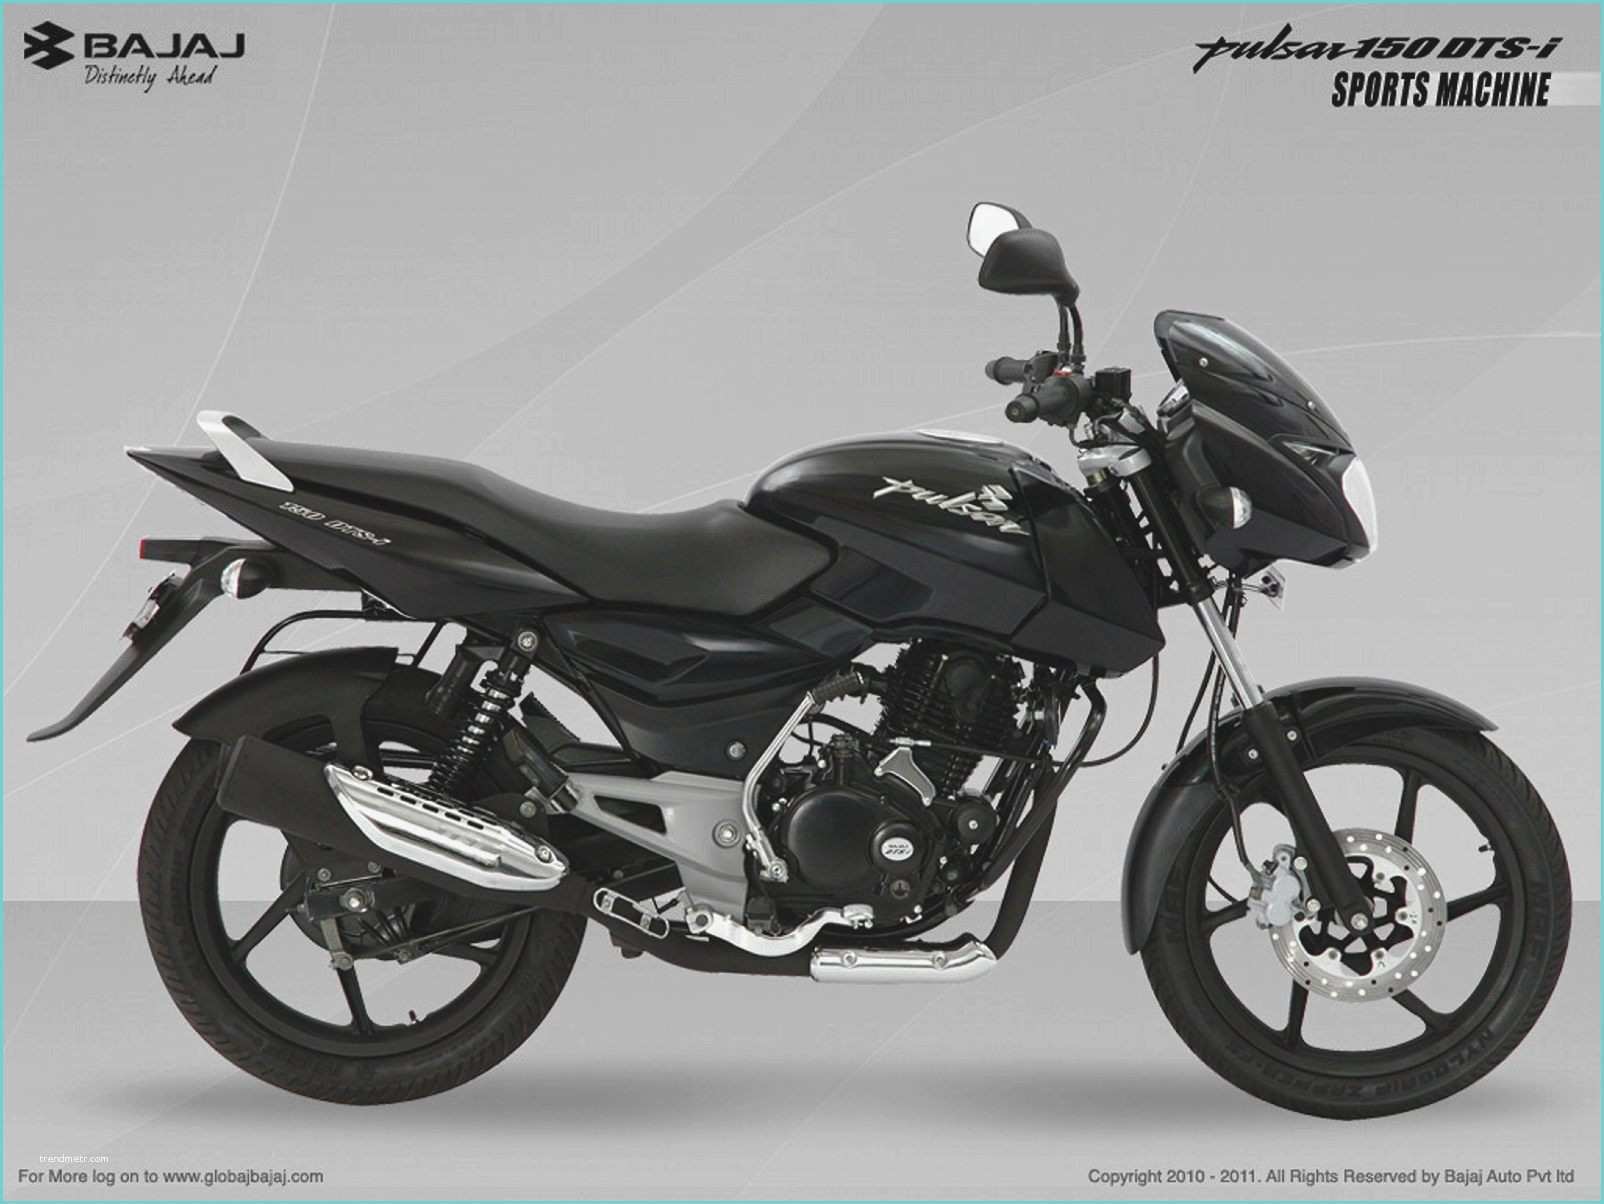 Pulsar Bike Stickering Models Bajaj Pulsar Bike In India with Its All the Models Details